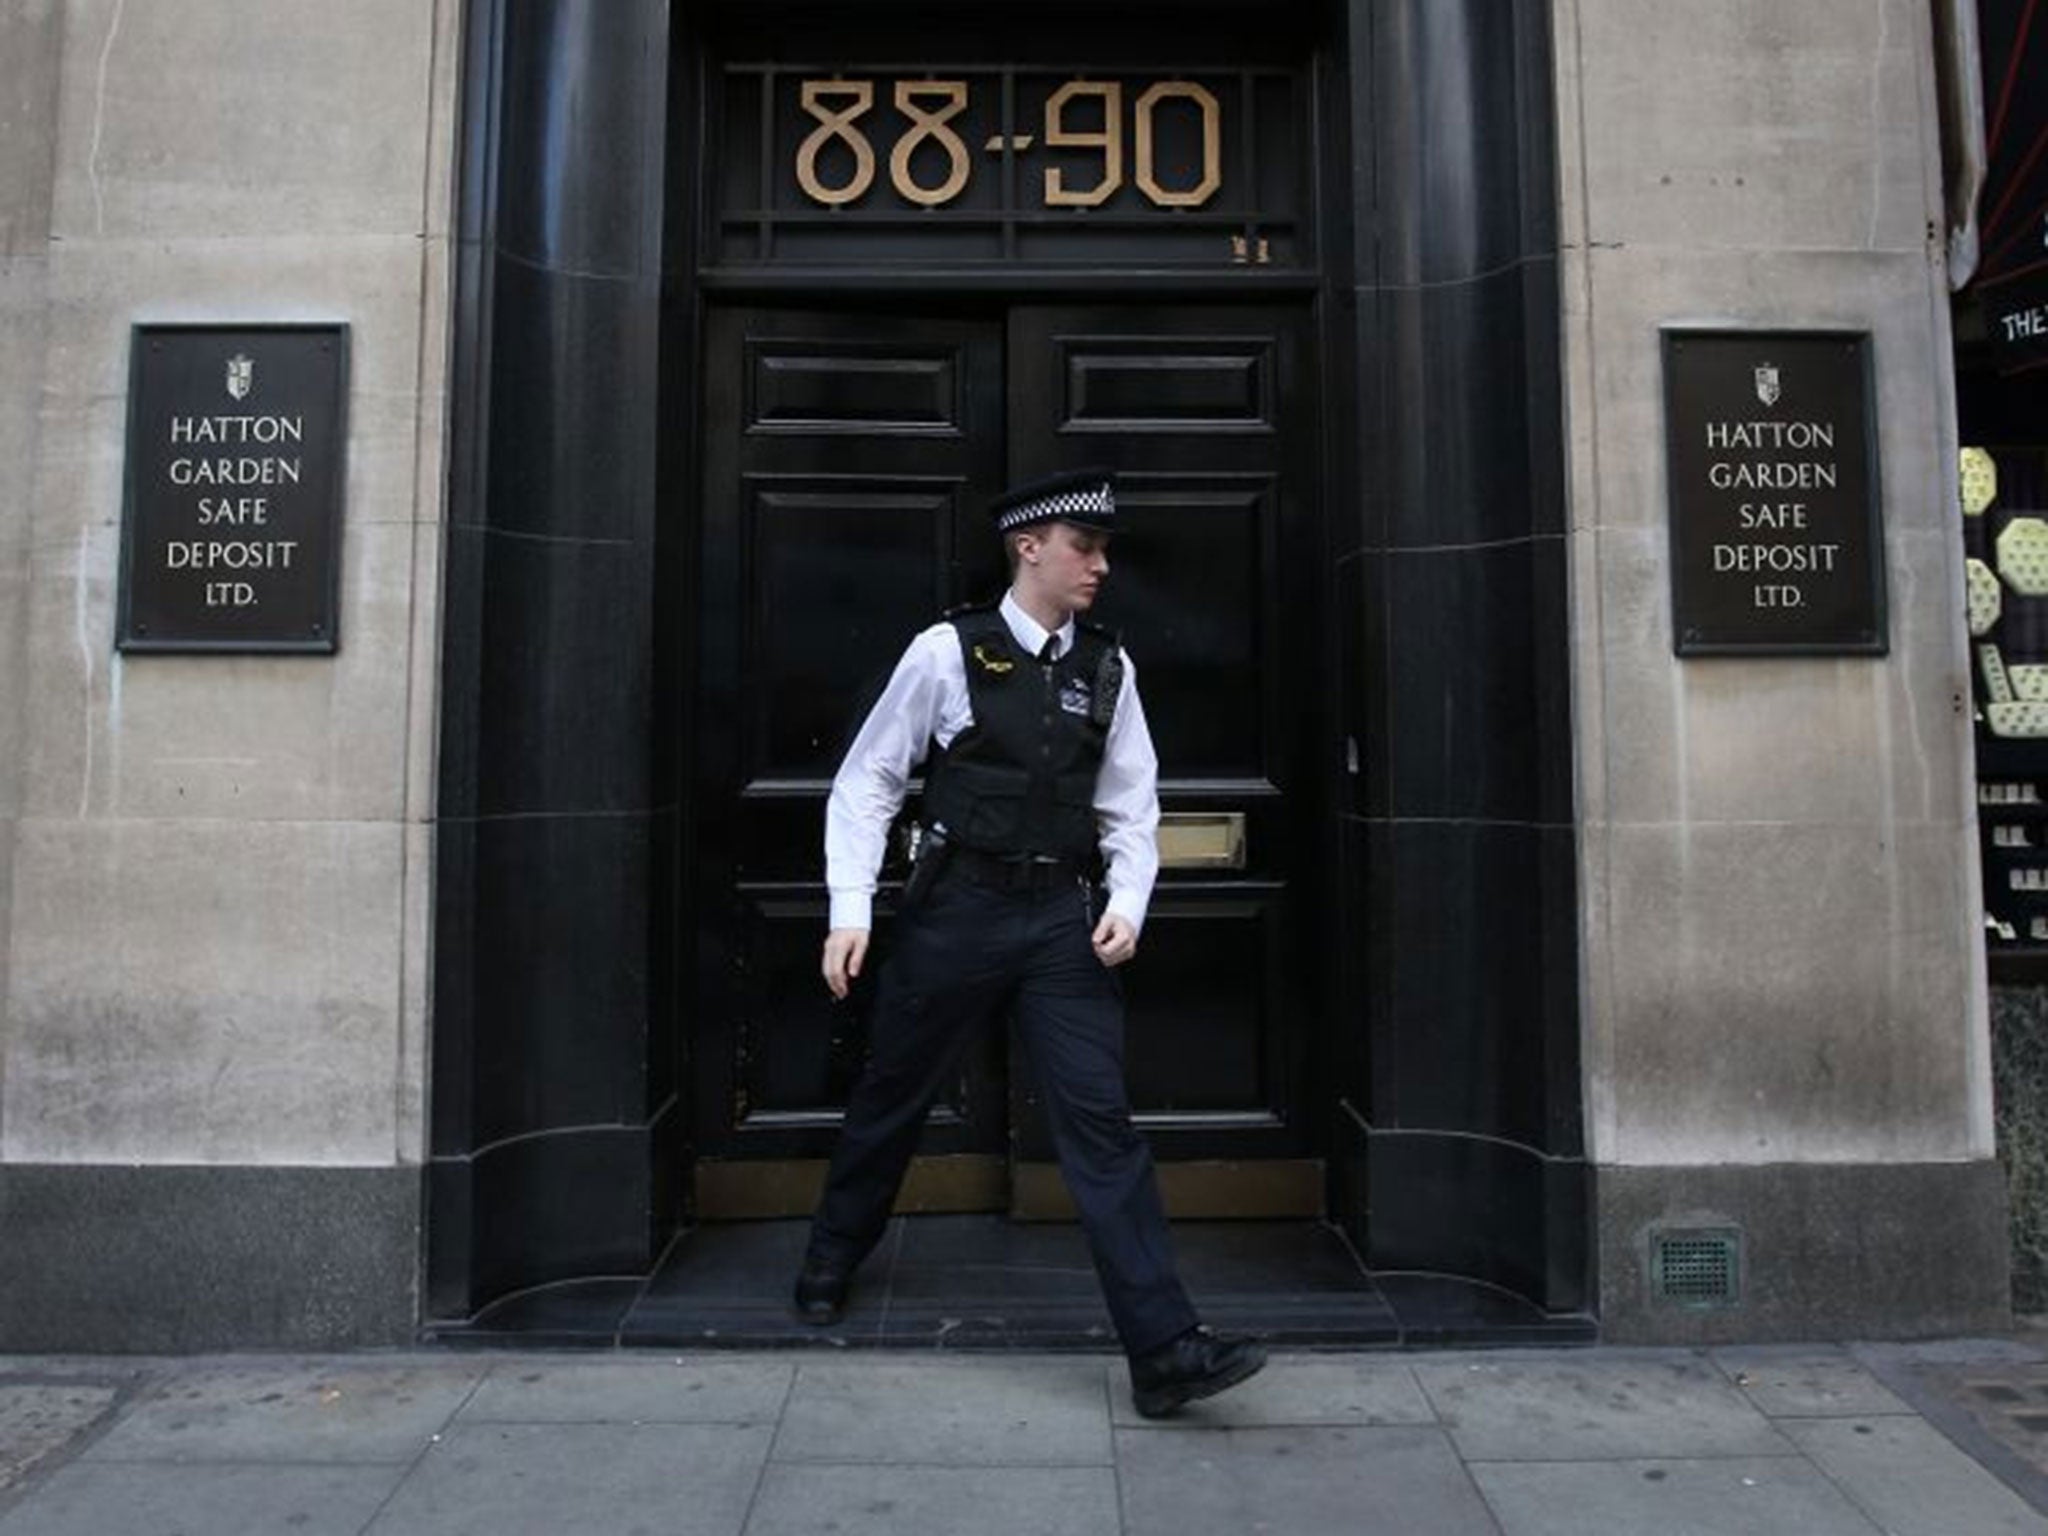 A policeman emerges from a Hatton Garden safe deposit, where burglars broke into safety deposit boxes.